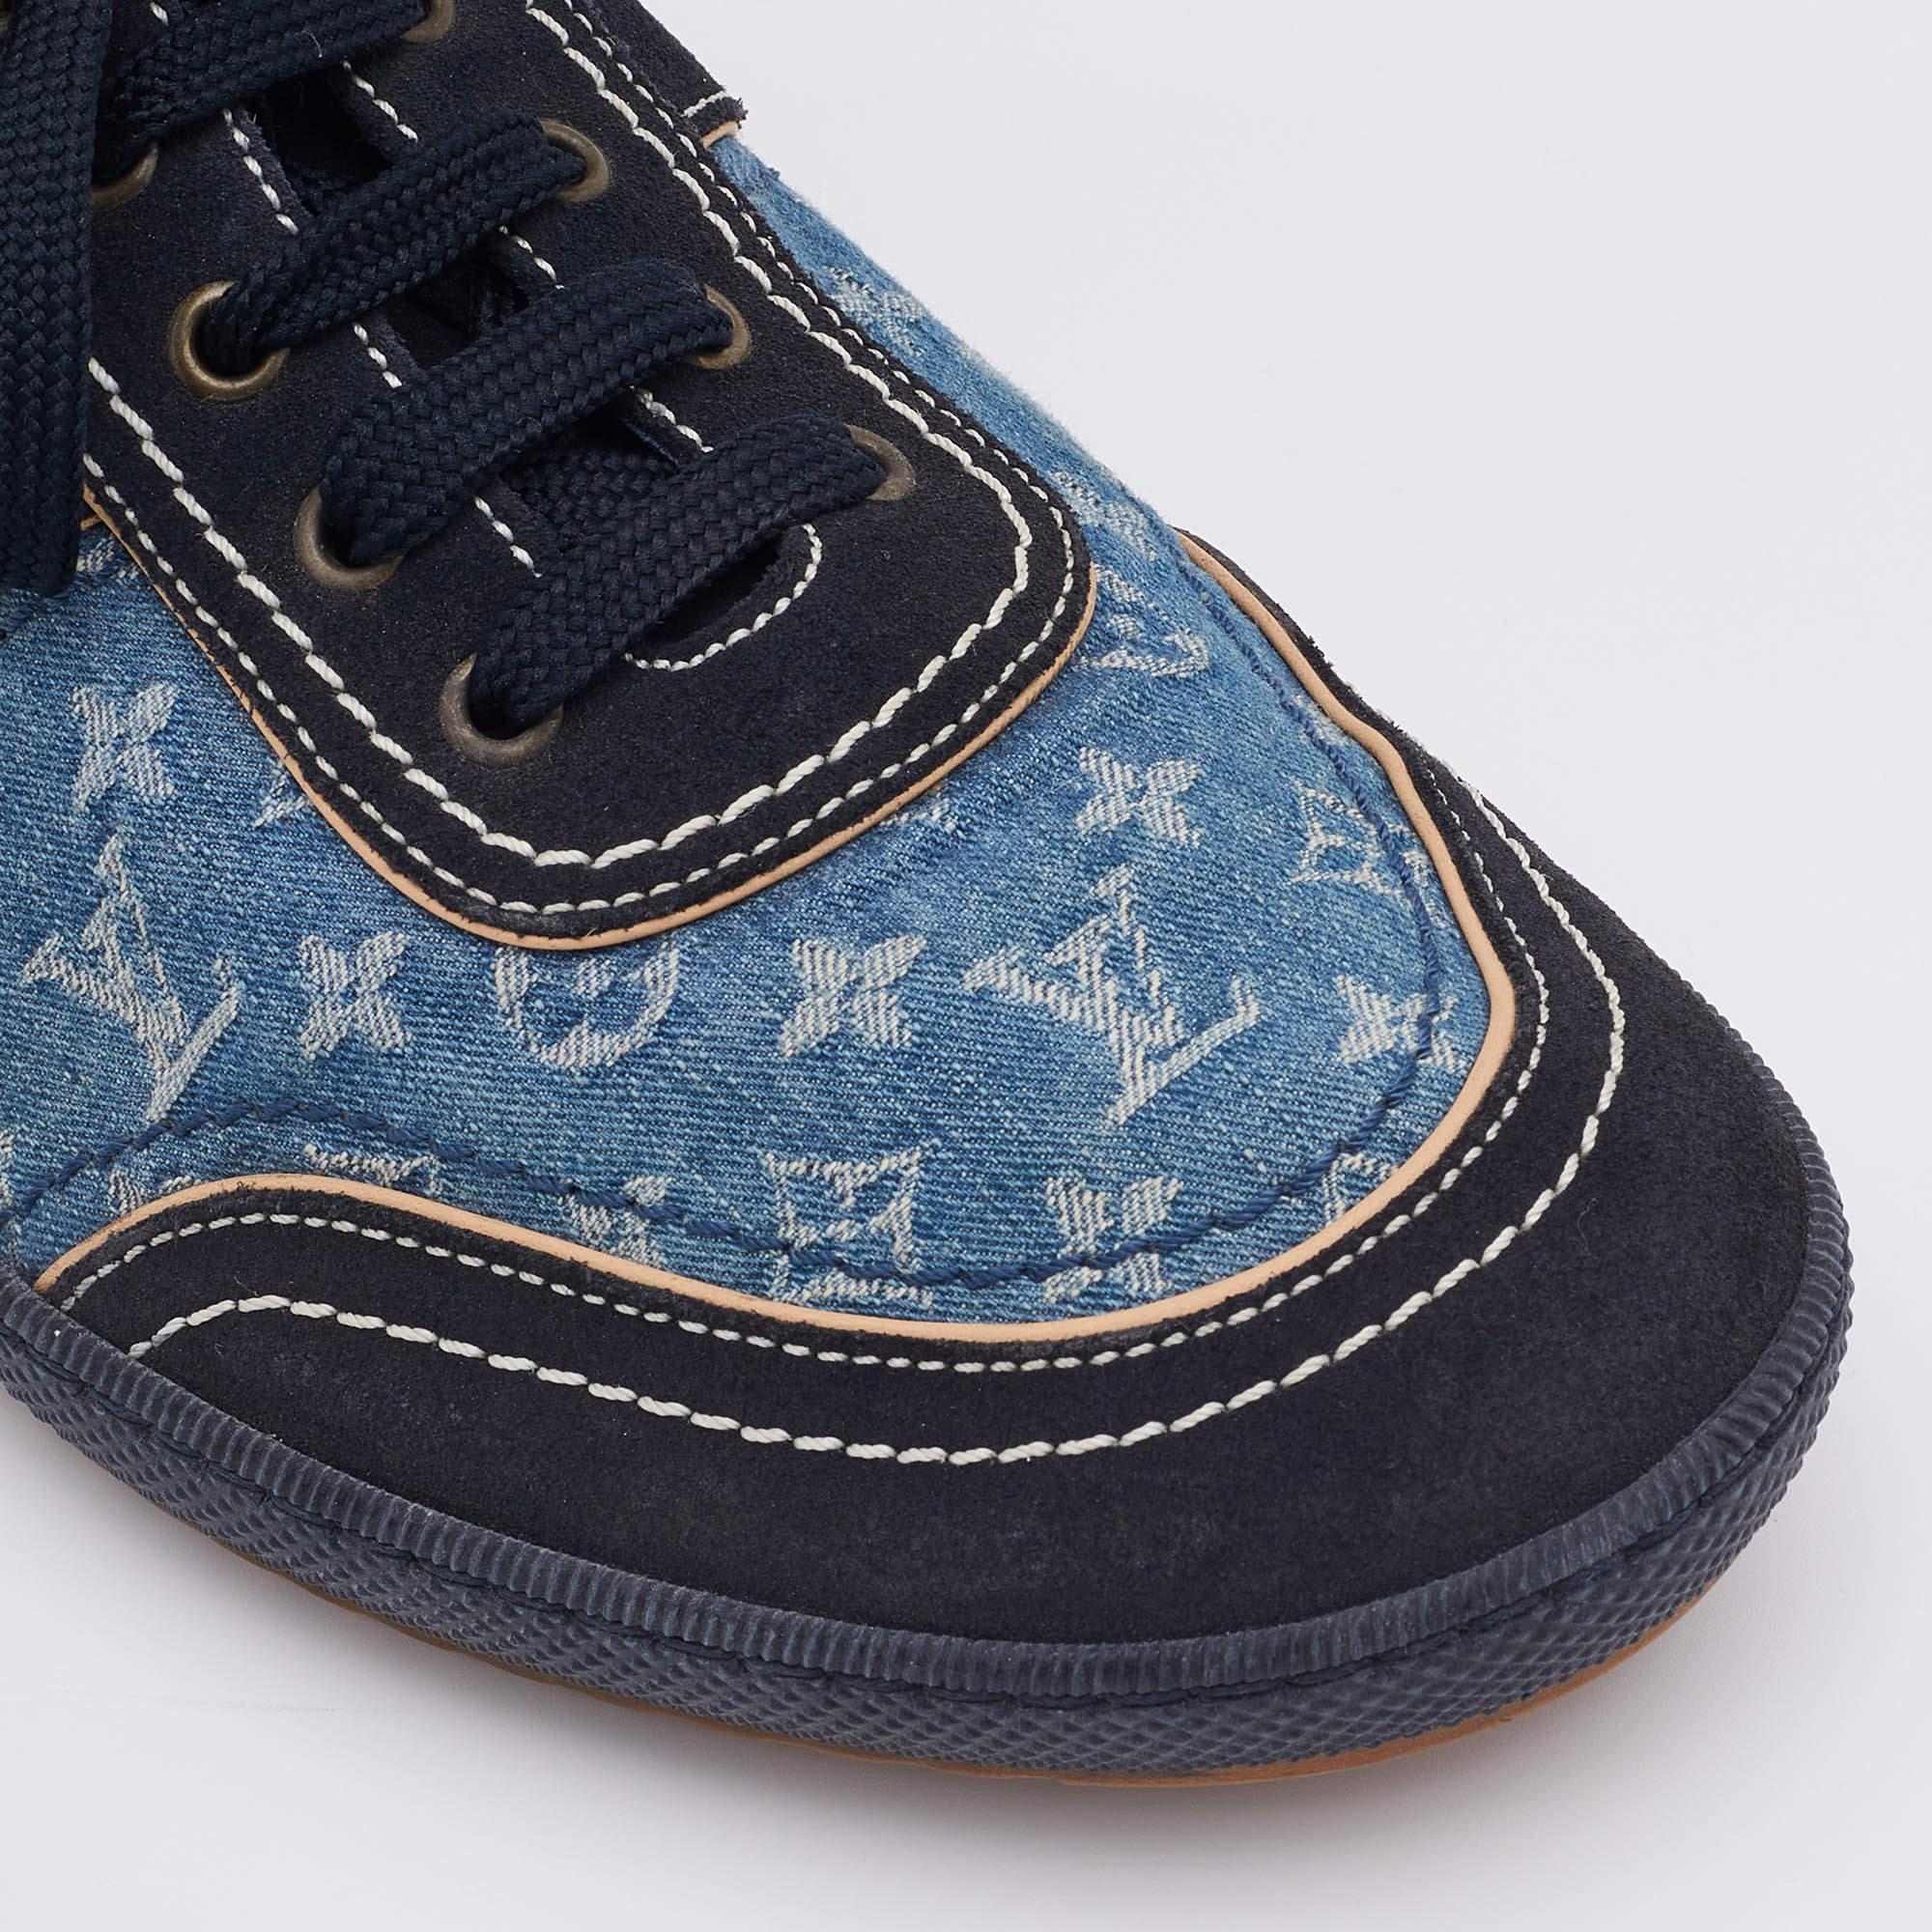 Louis Vuitton Blue/Black Monogram Denim and Suede Low Top Sneakers Size 42 1